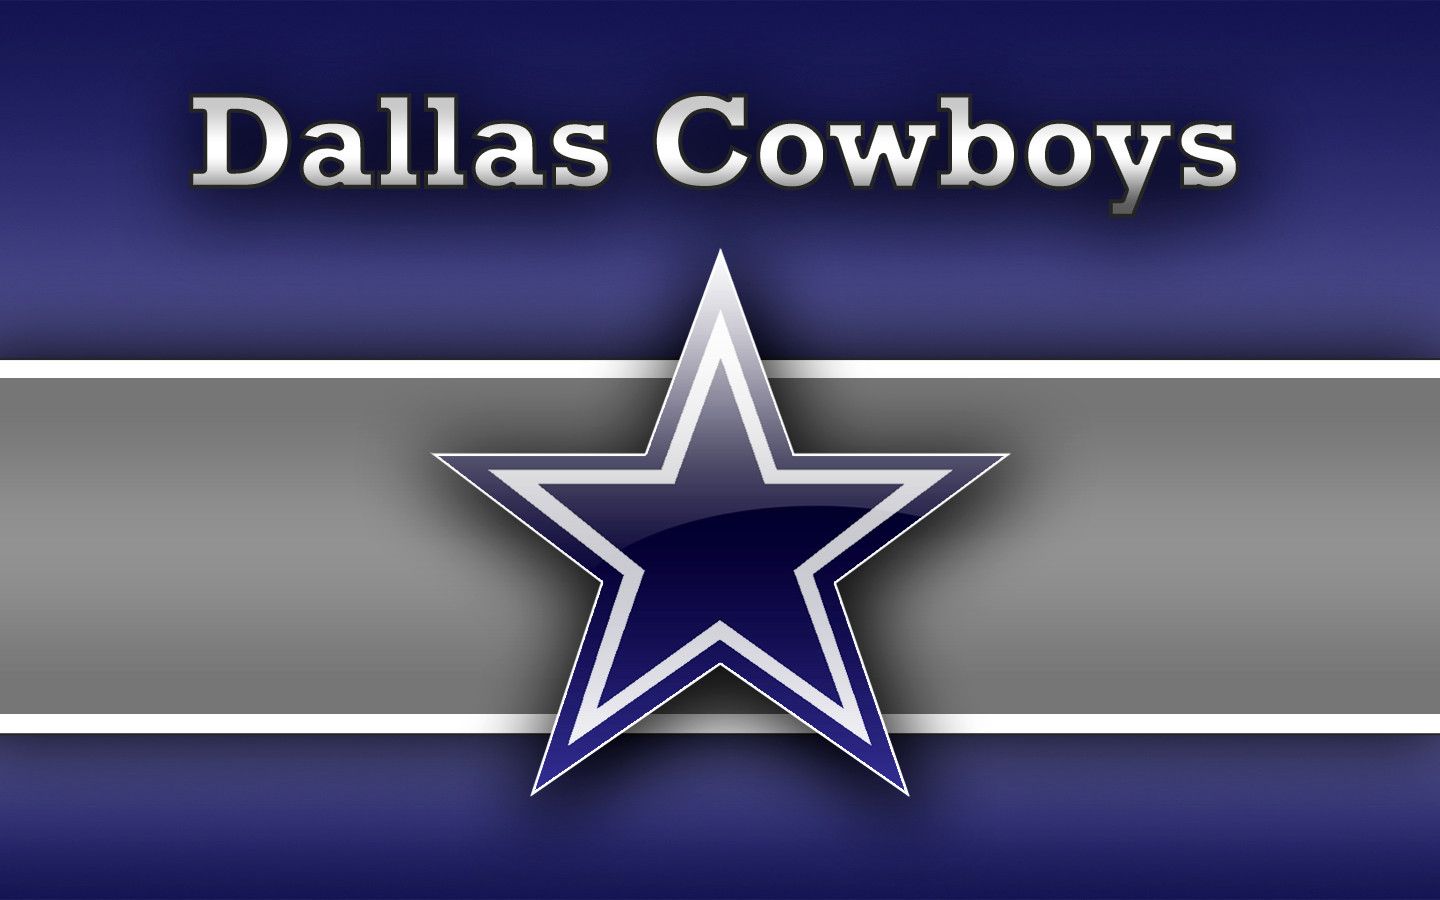 Dallas Cowboys Wallpaper Free Download